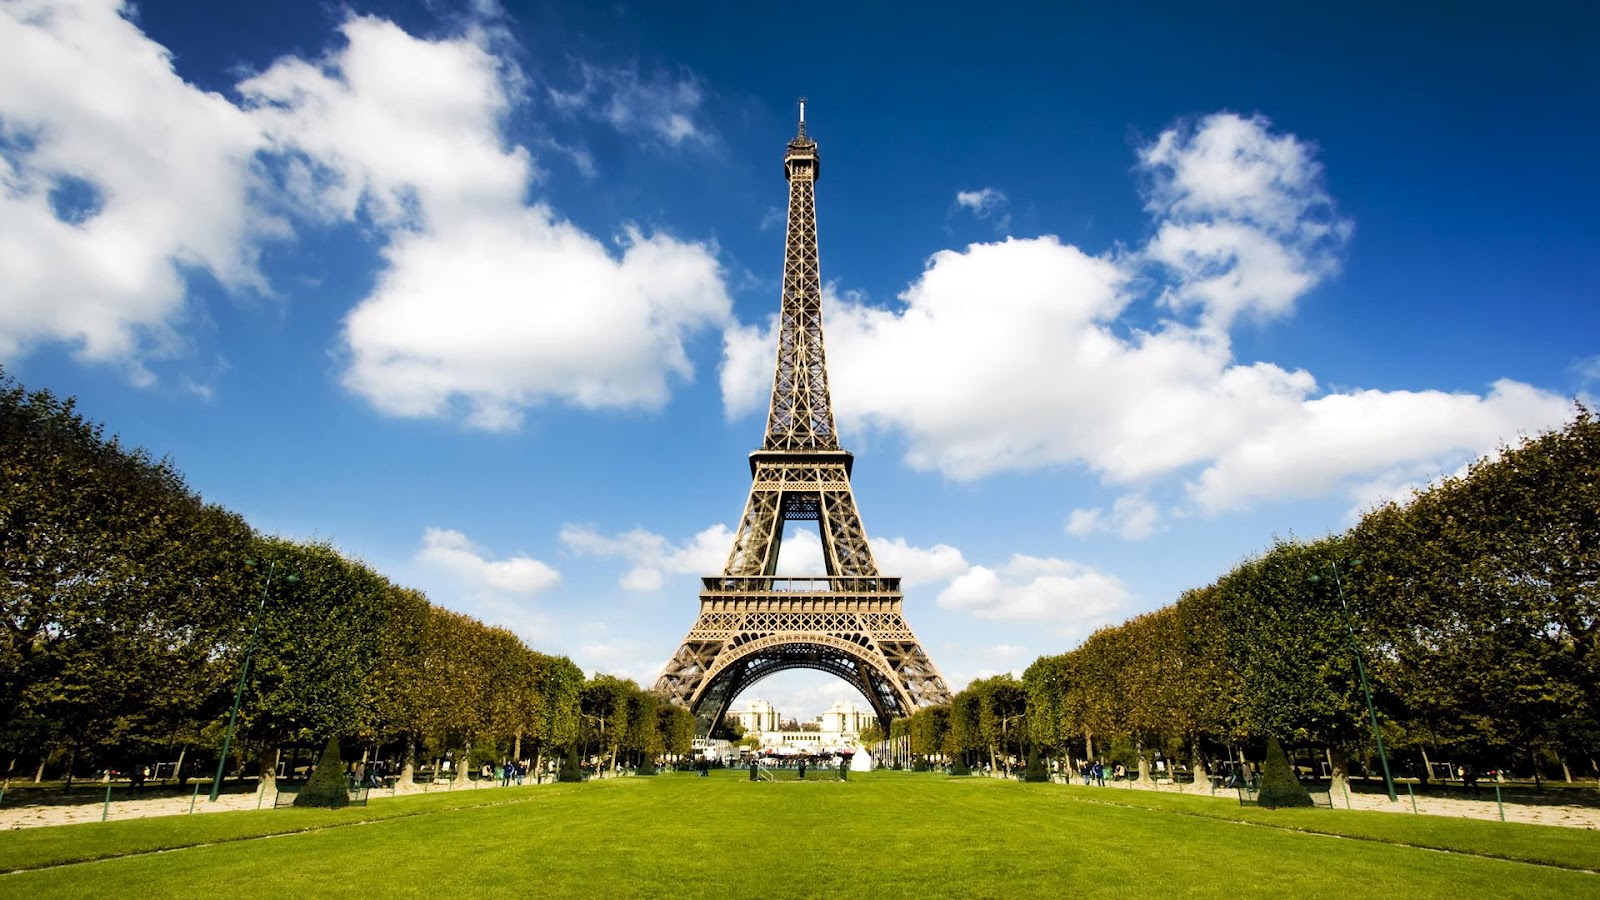 46+] Eiffel Tower HD Wallpapers - WallpaperSafari